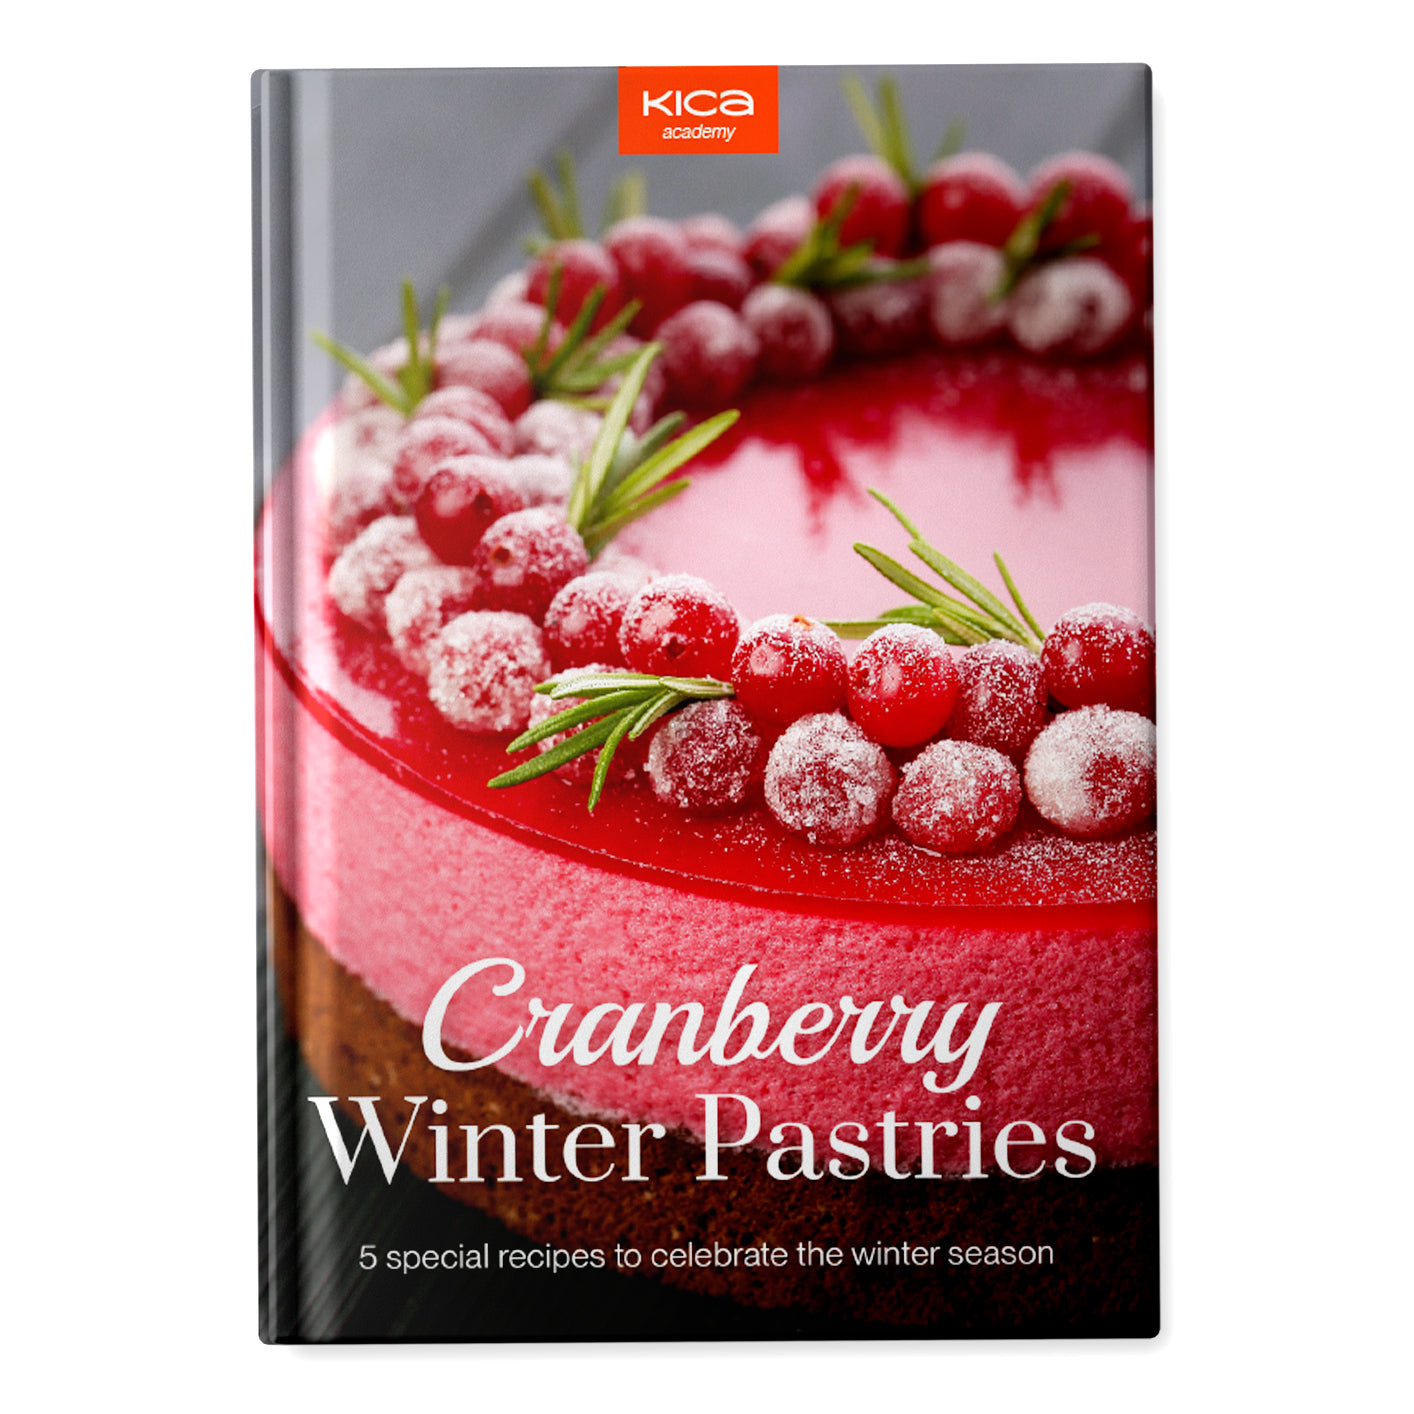 Cranberry Winter Pastries